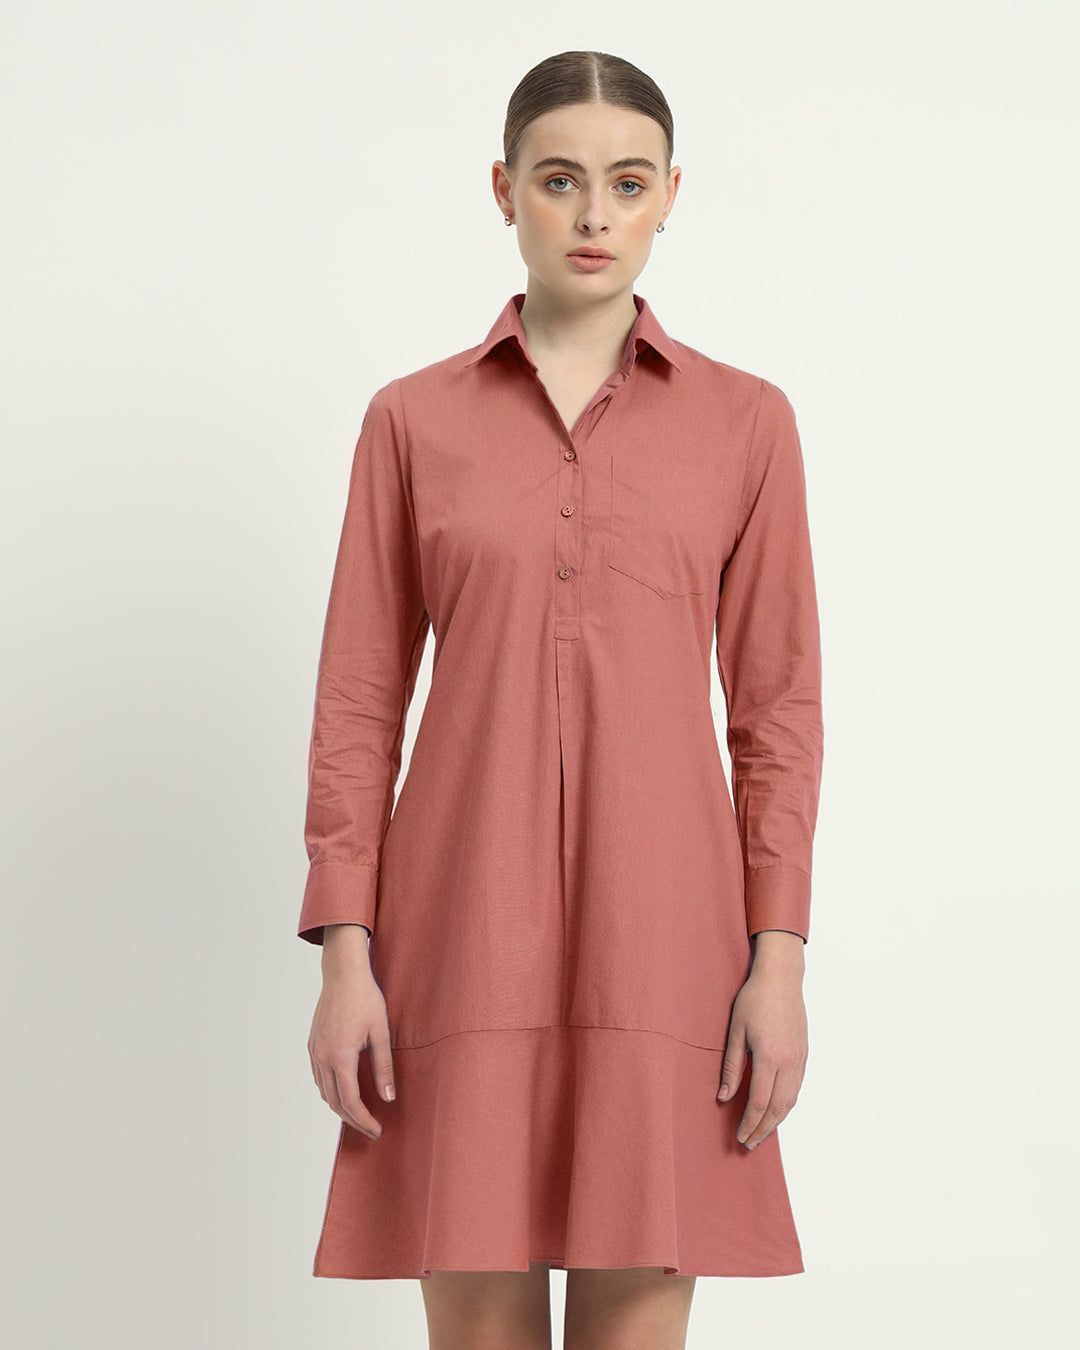 The Ivory Pink Medina Cotton Dress